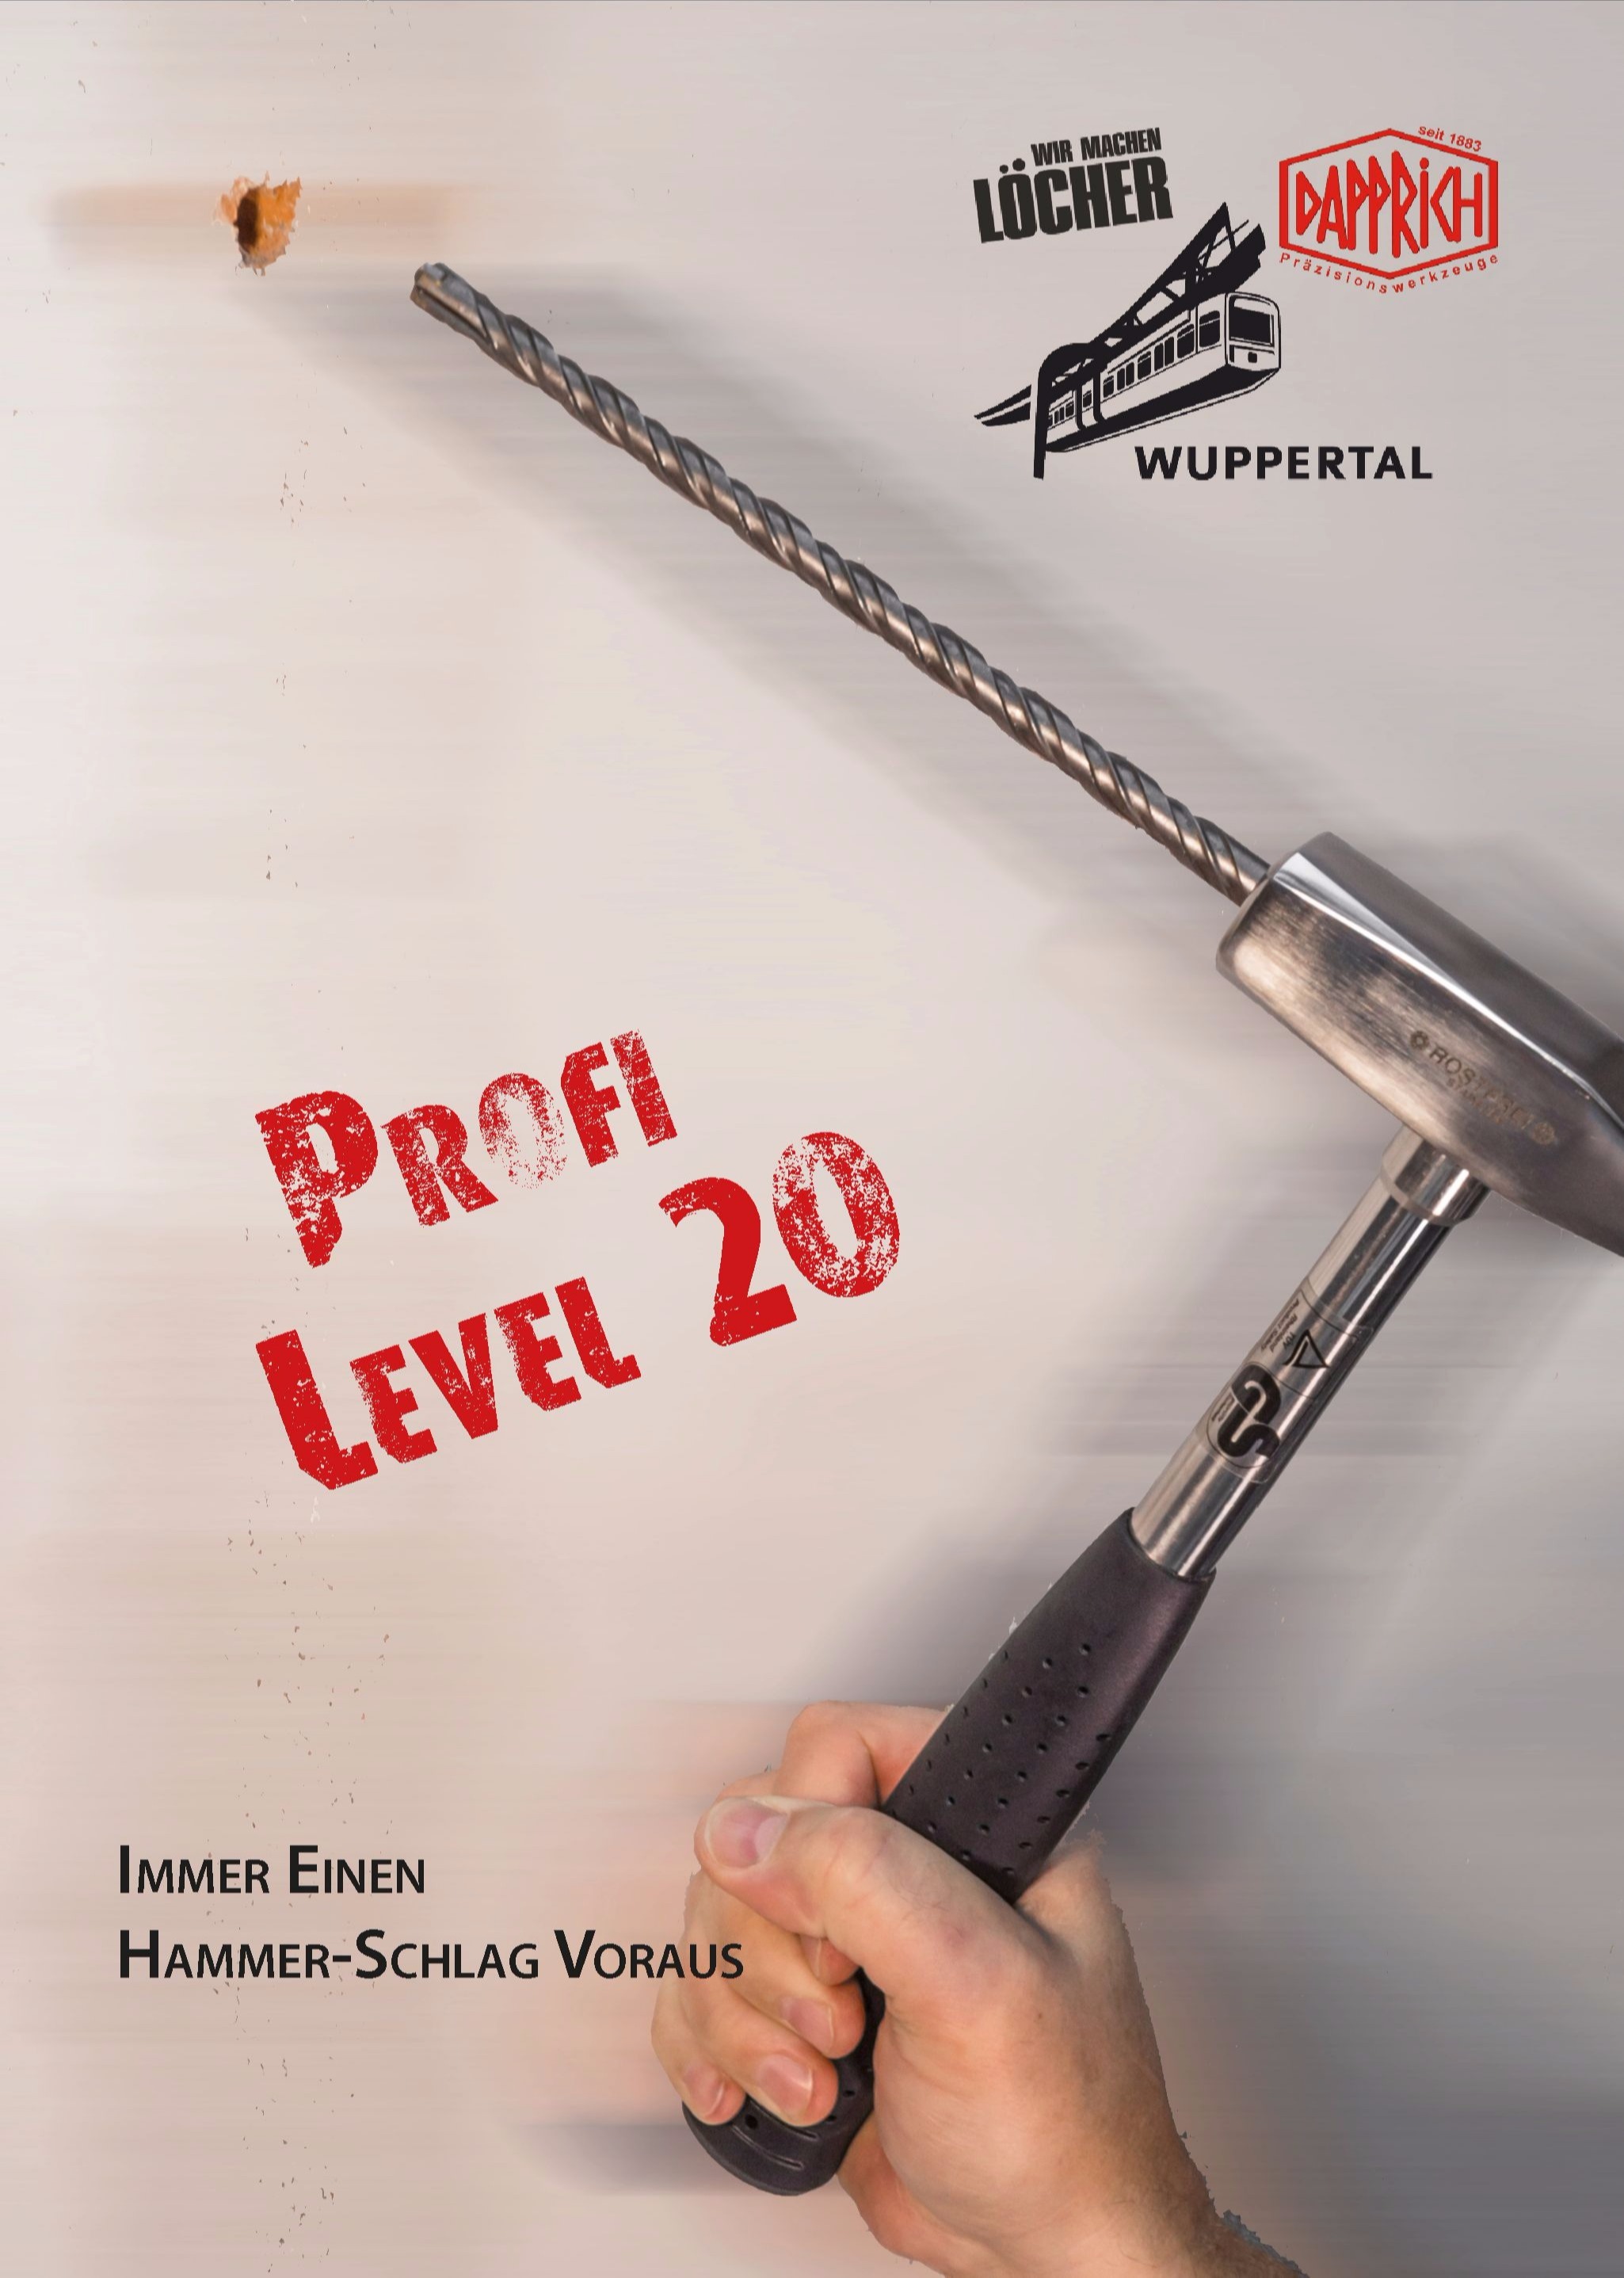 Profi-Level'20